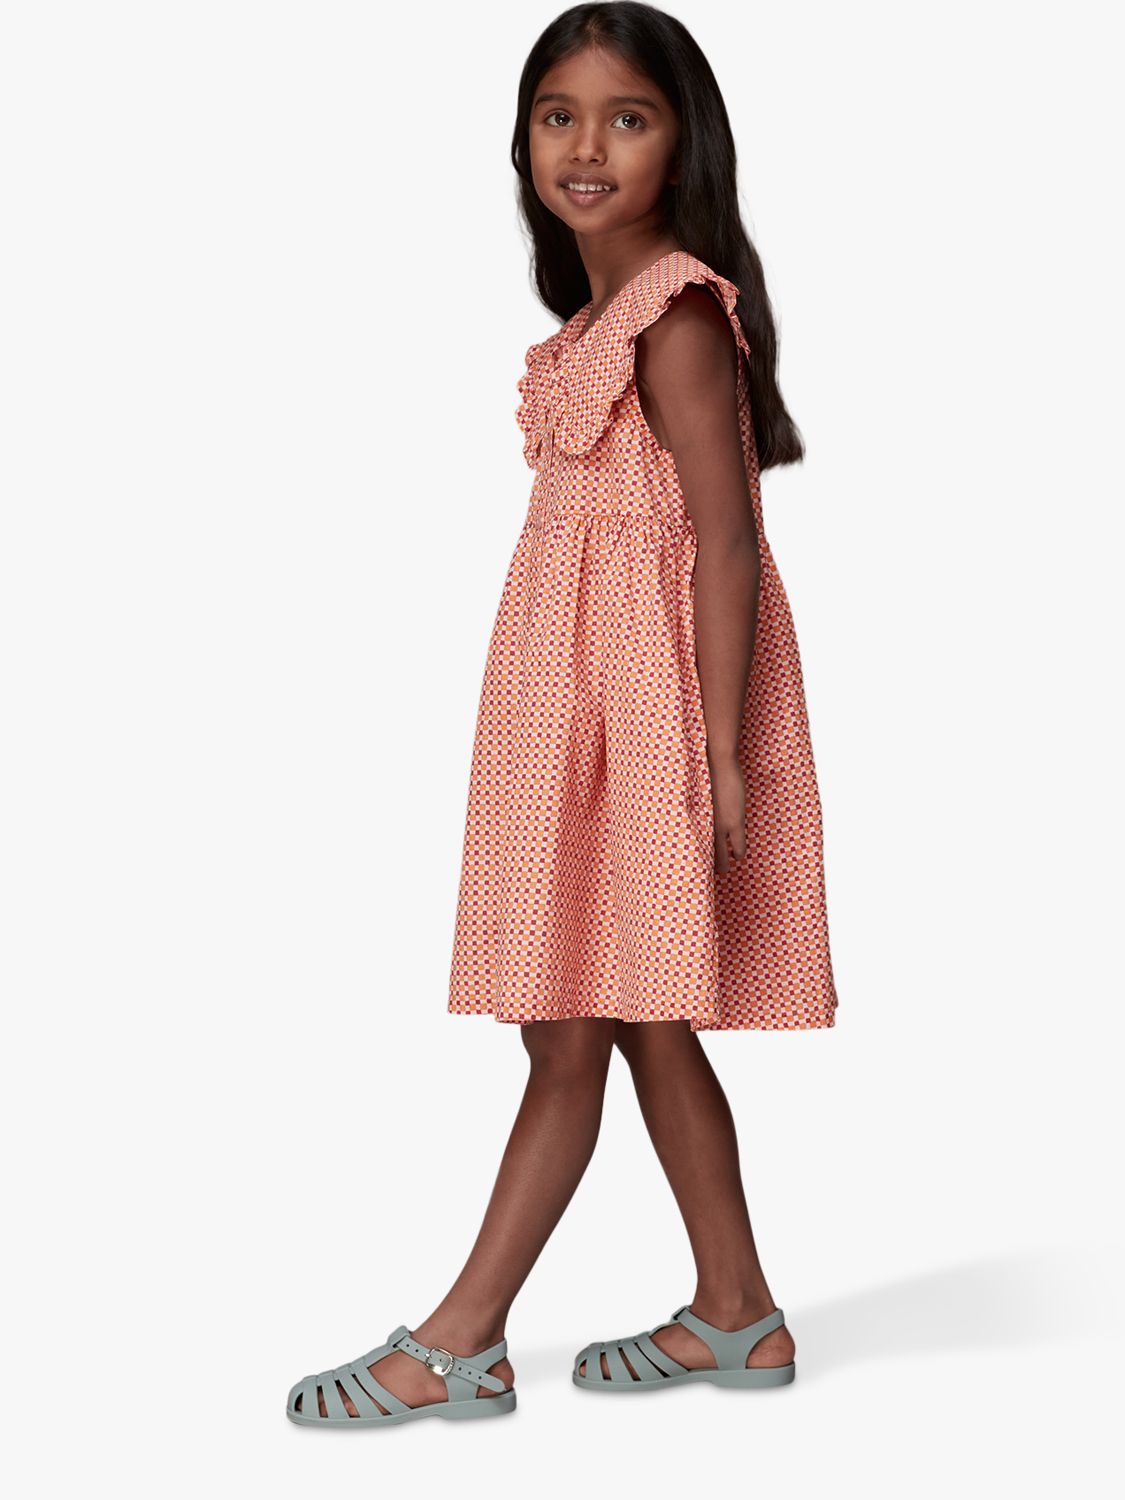 Whistles Kids' Nova Cotton Ditsy Square Peter-Pan Collar Dress, Pink/Multi, 8-9 years